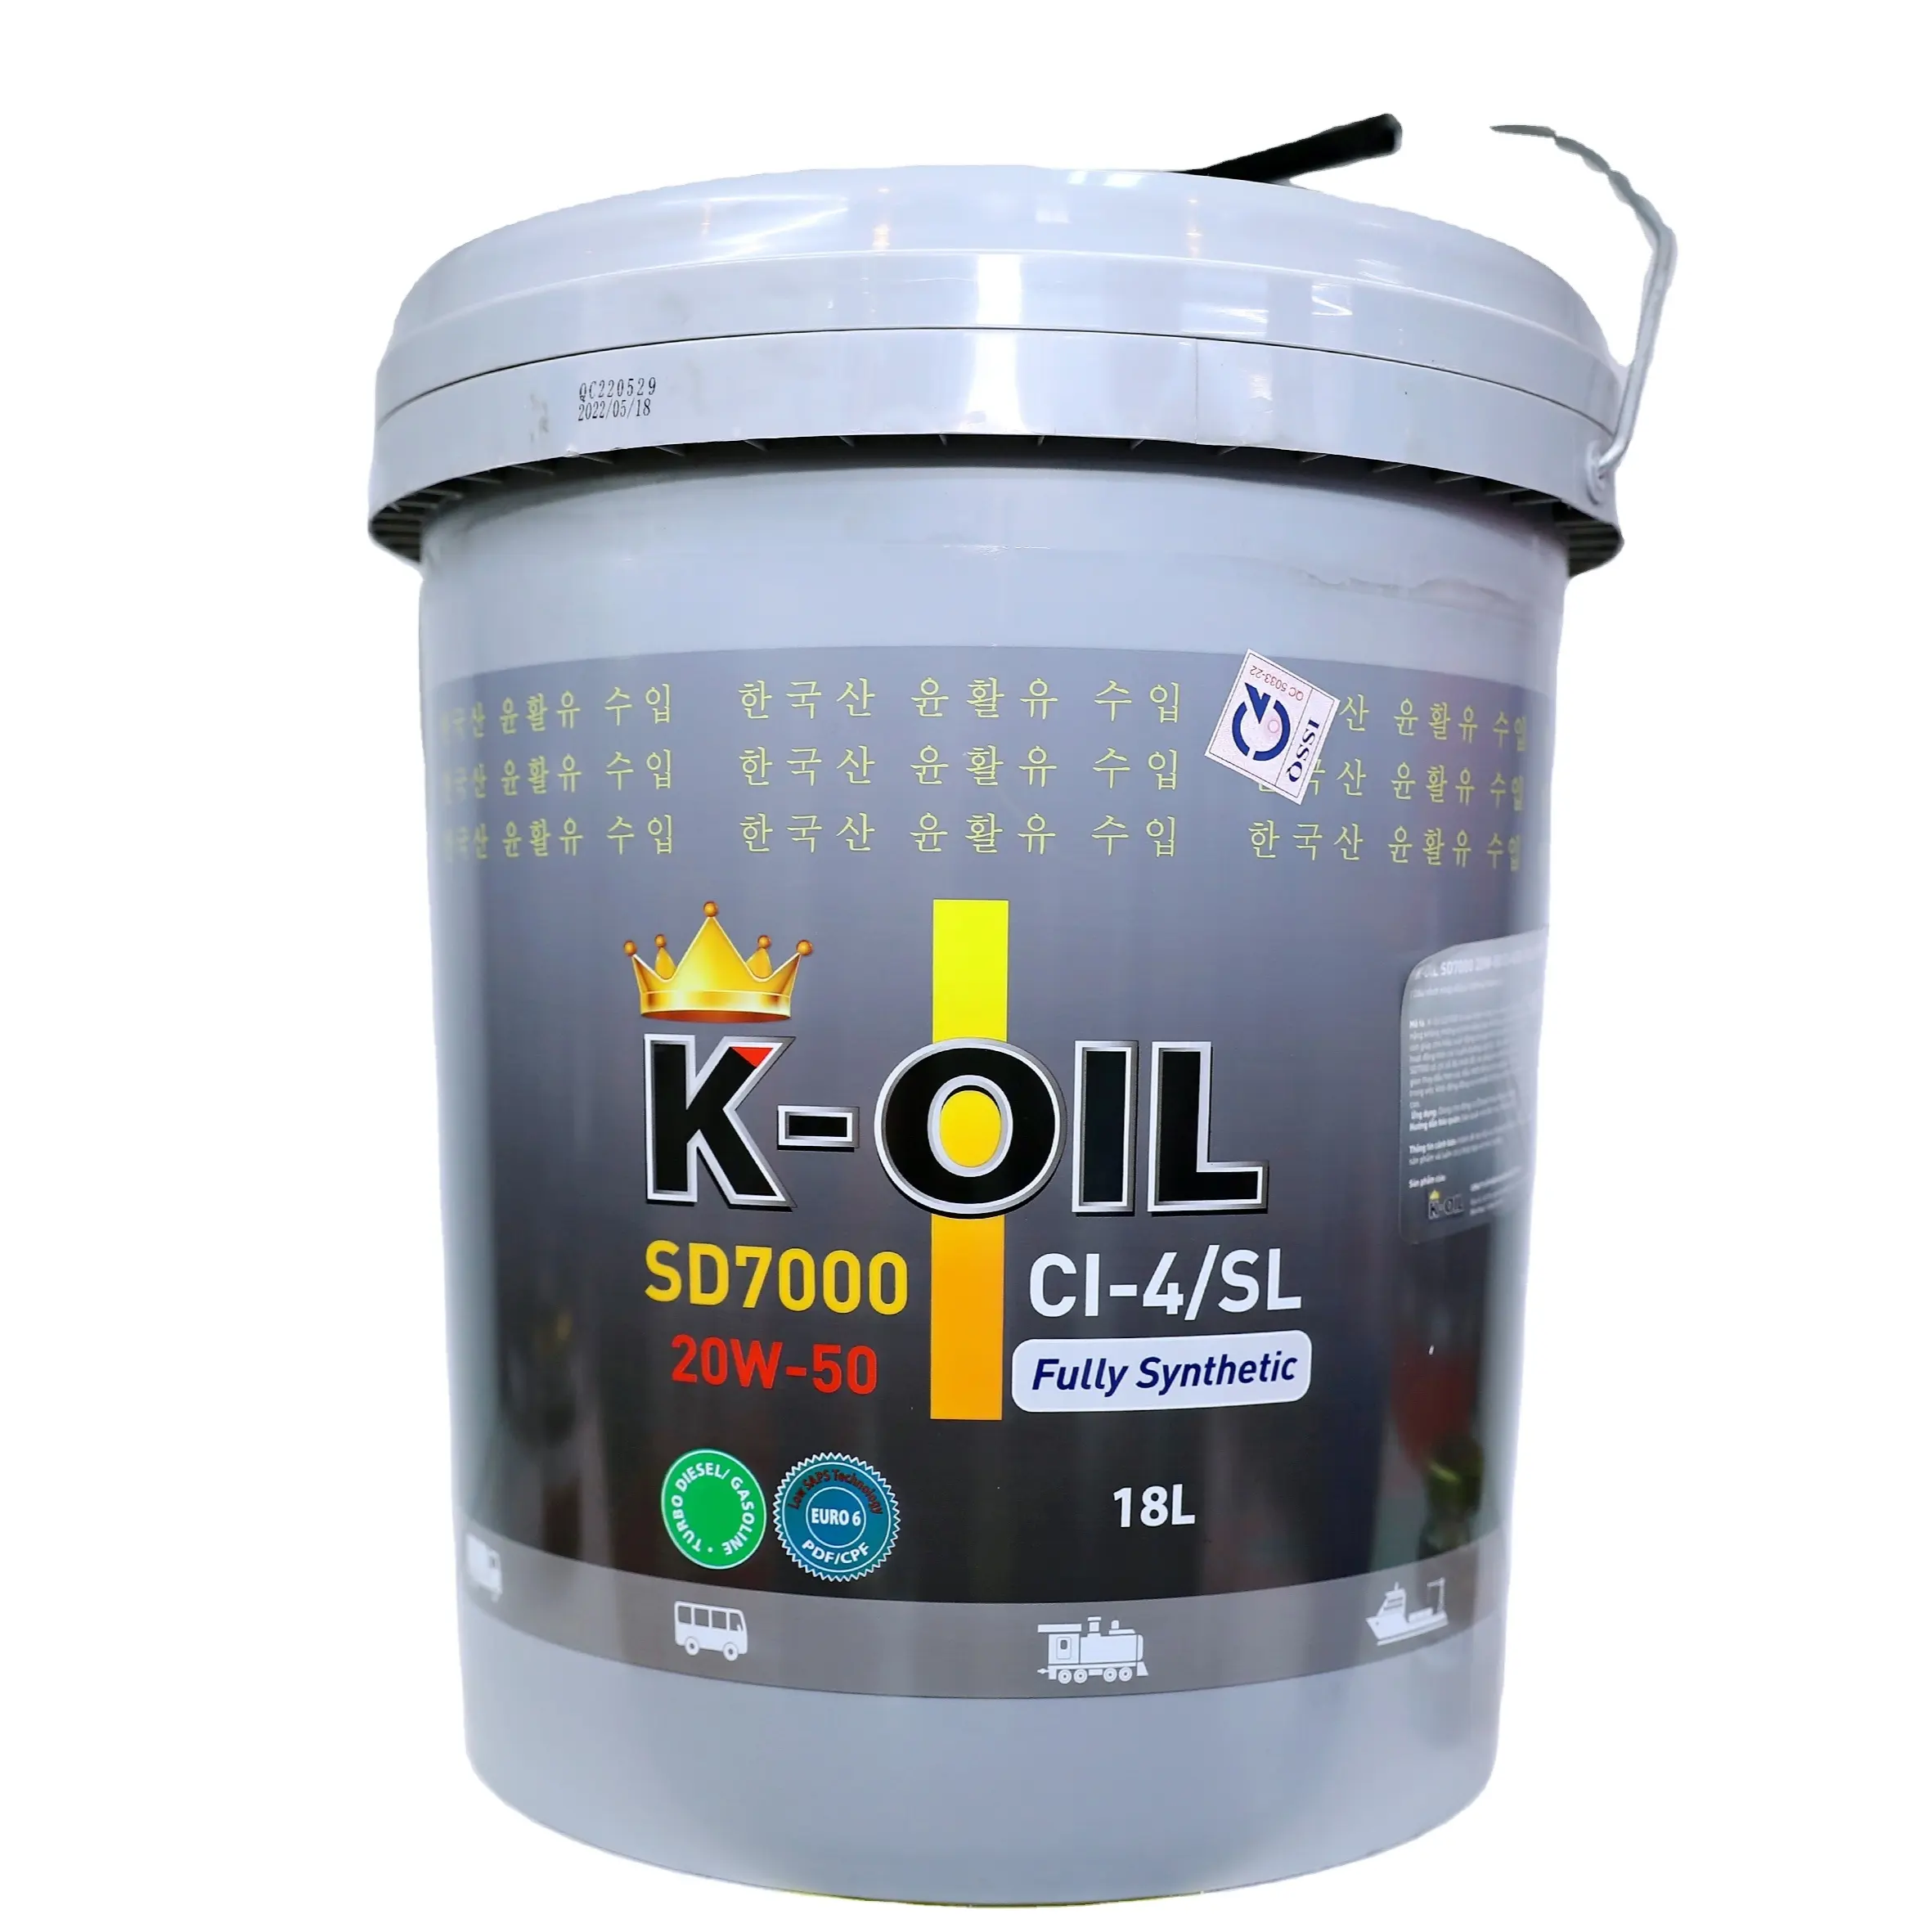 K-Oil SD7000 15W40/20W50/SL زيت اصطناعي بالكامل ، عمر خدمة طويل ومحركات ديزل رخيصة الثمن